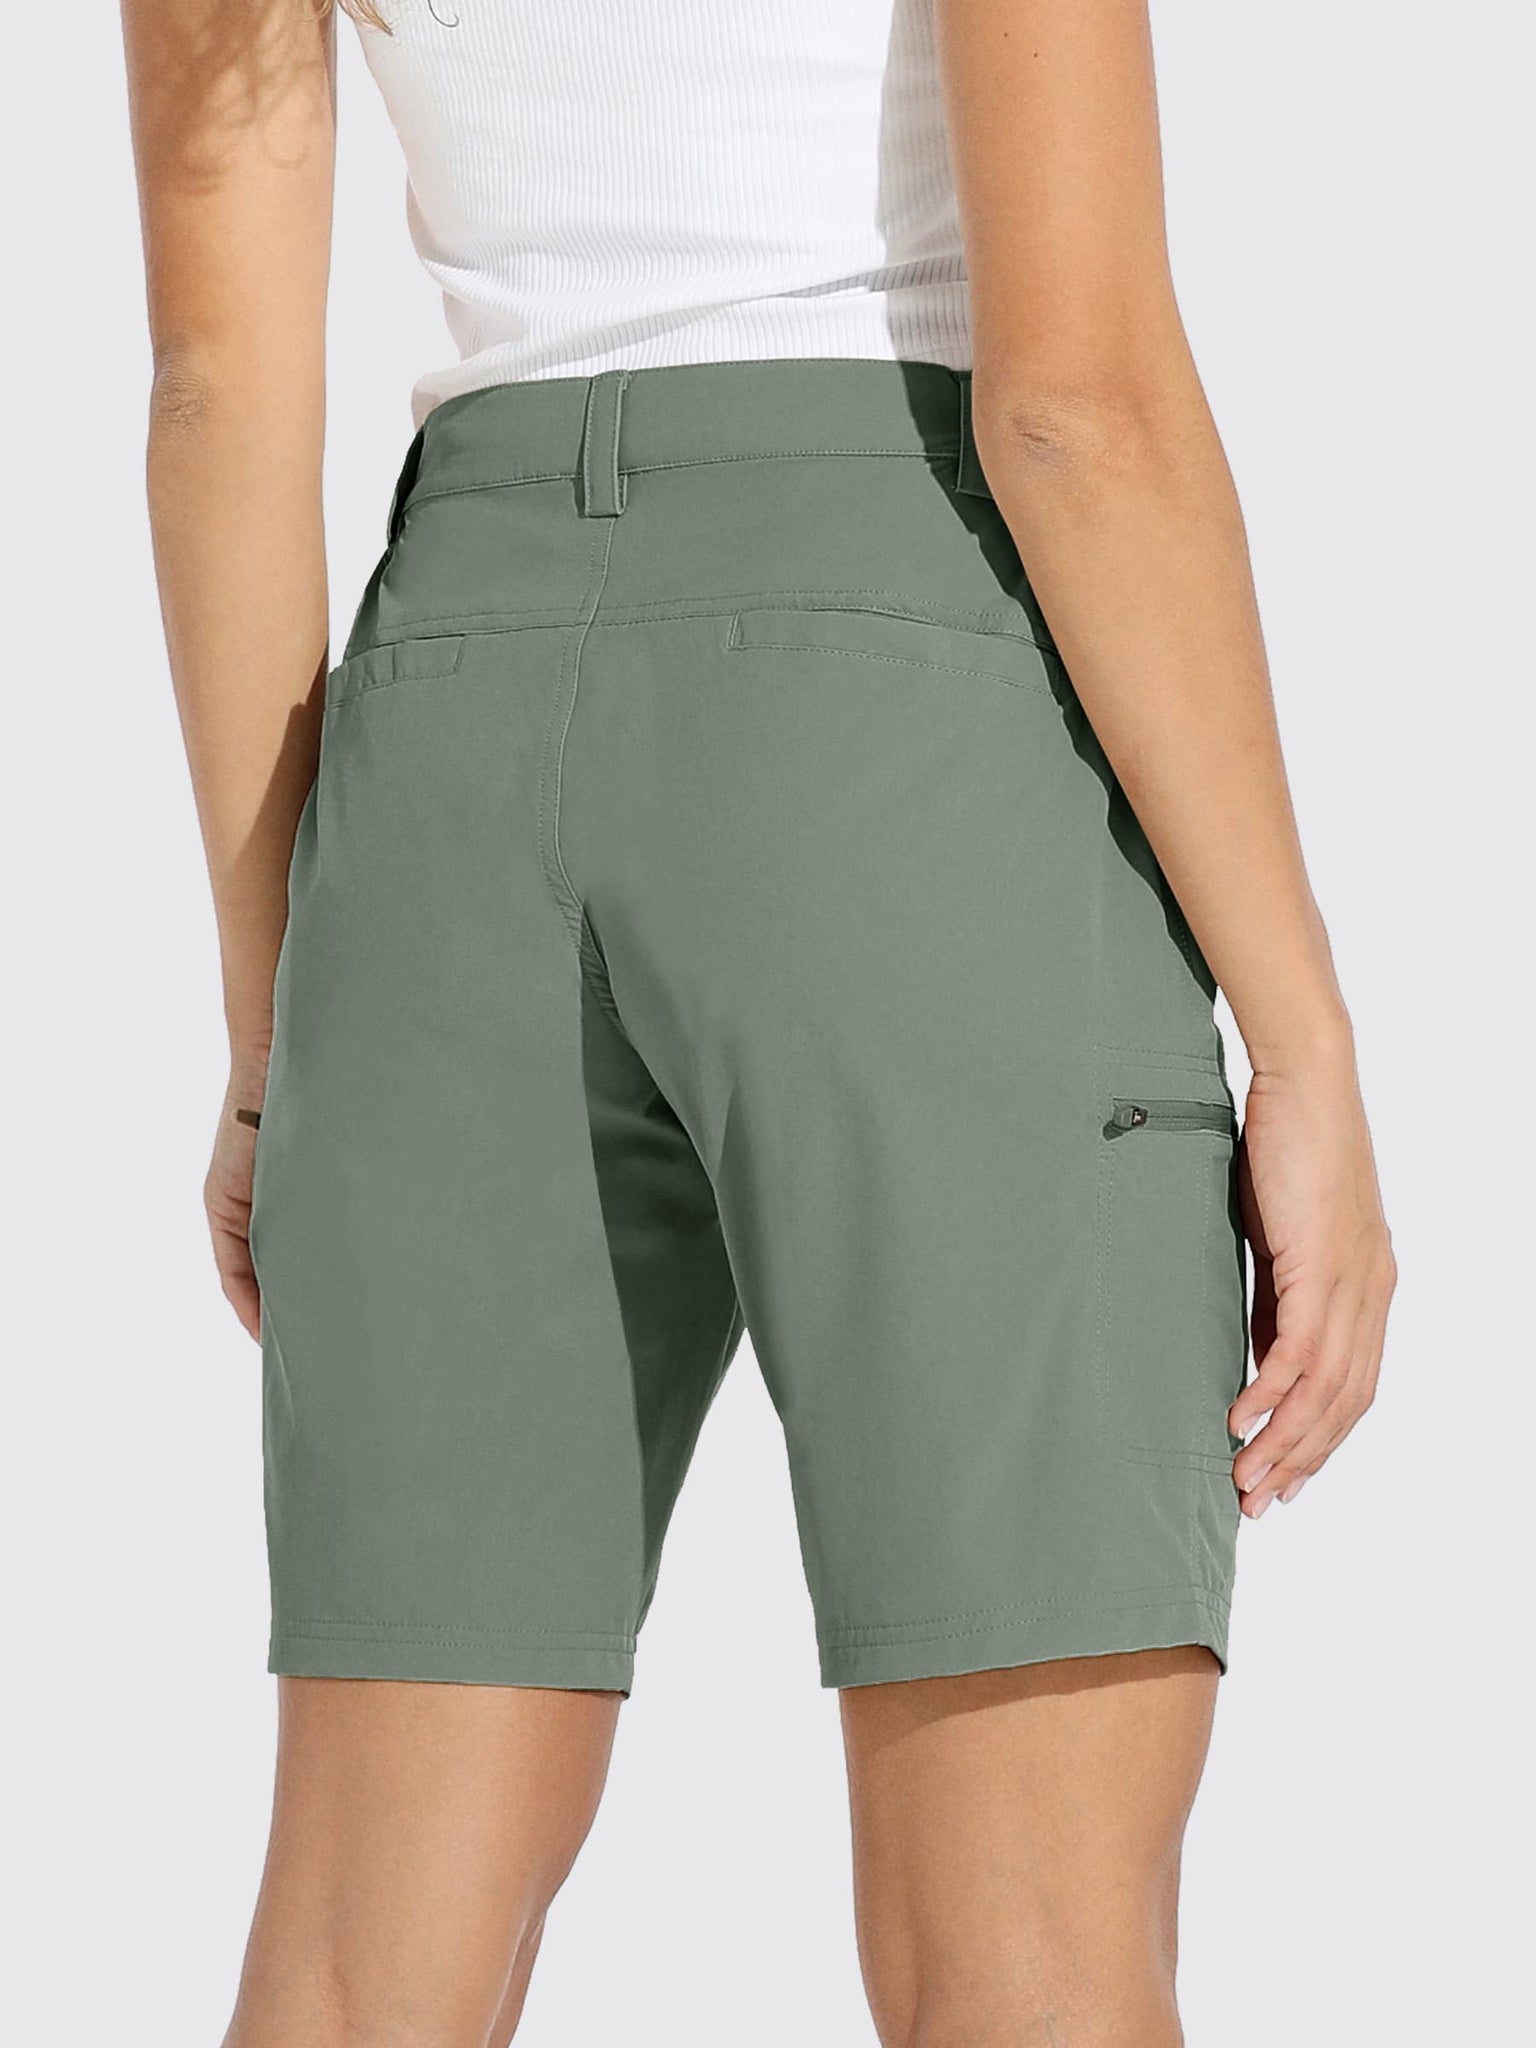 Women's Outdoor Cargo Shorts 10 Inseam_SageGreen2